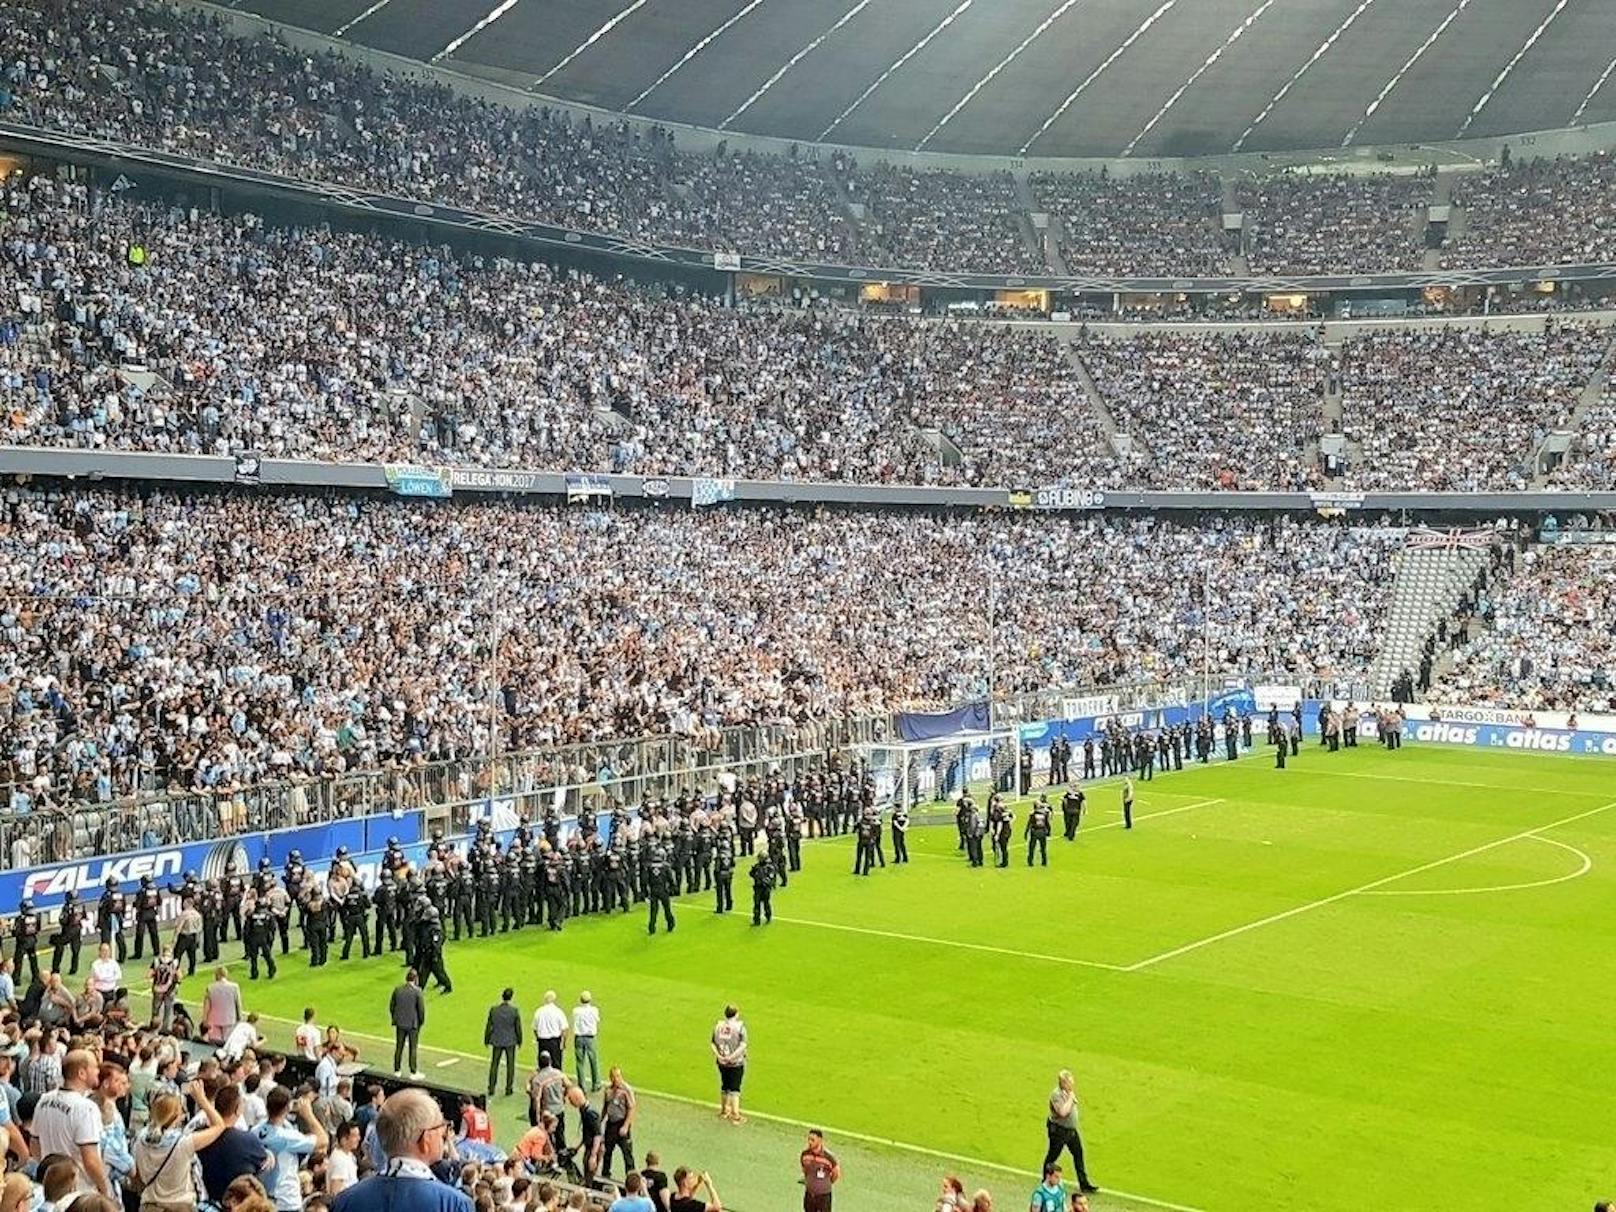 1860 München-Fans randalieren